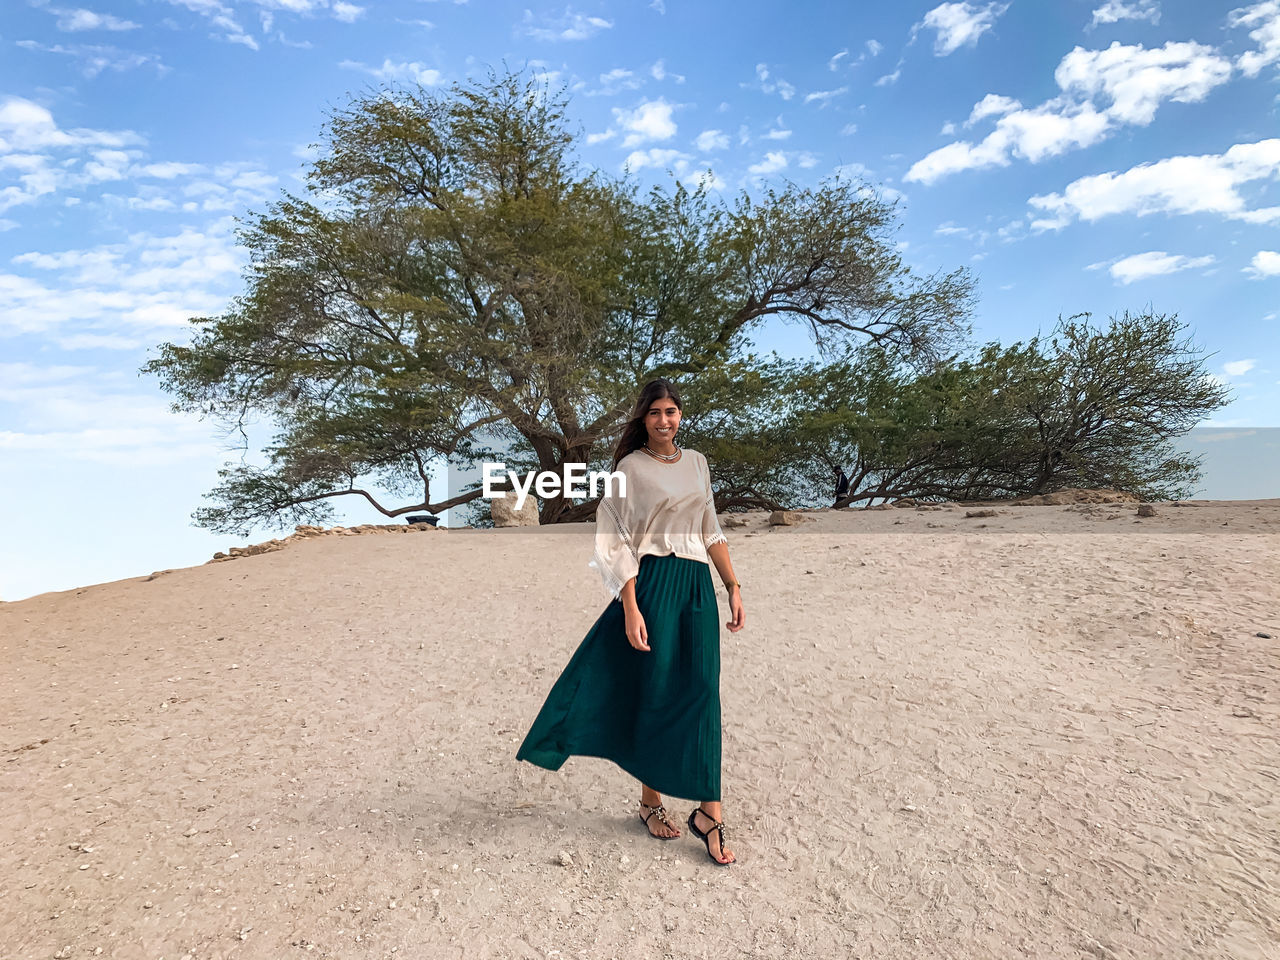 Full length of woman standing by tree on the desert sand against sky